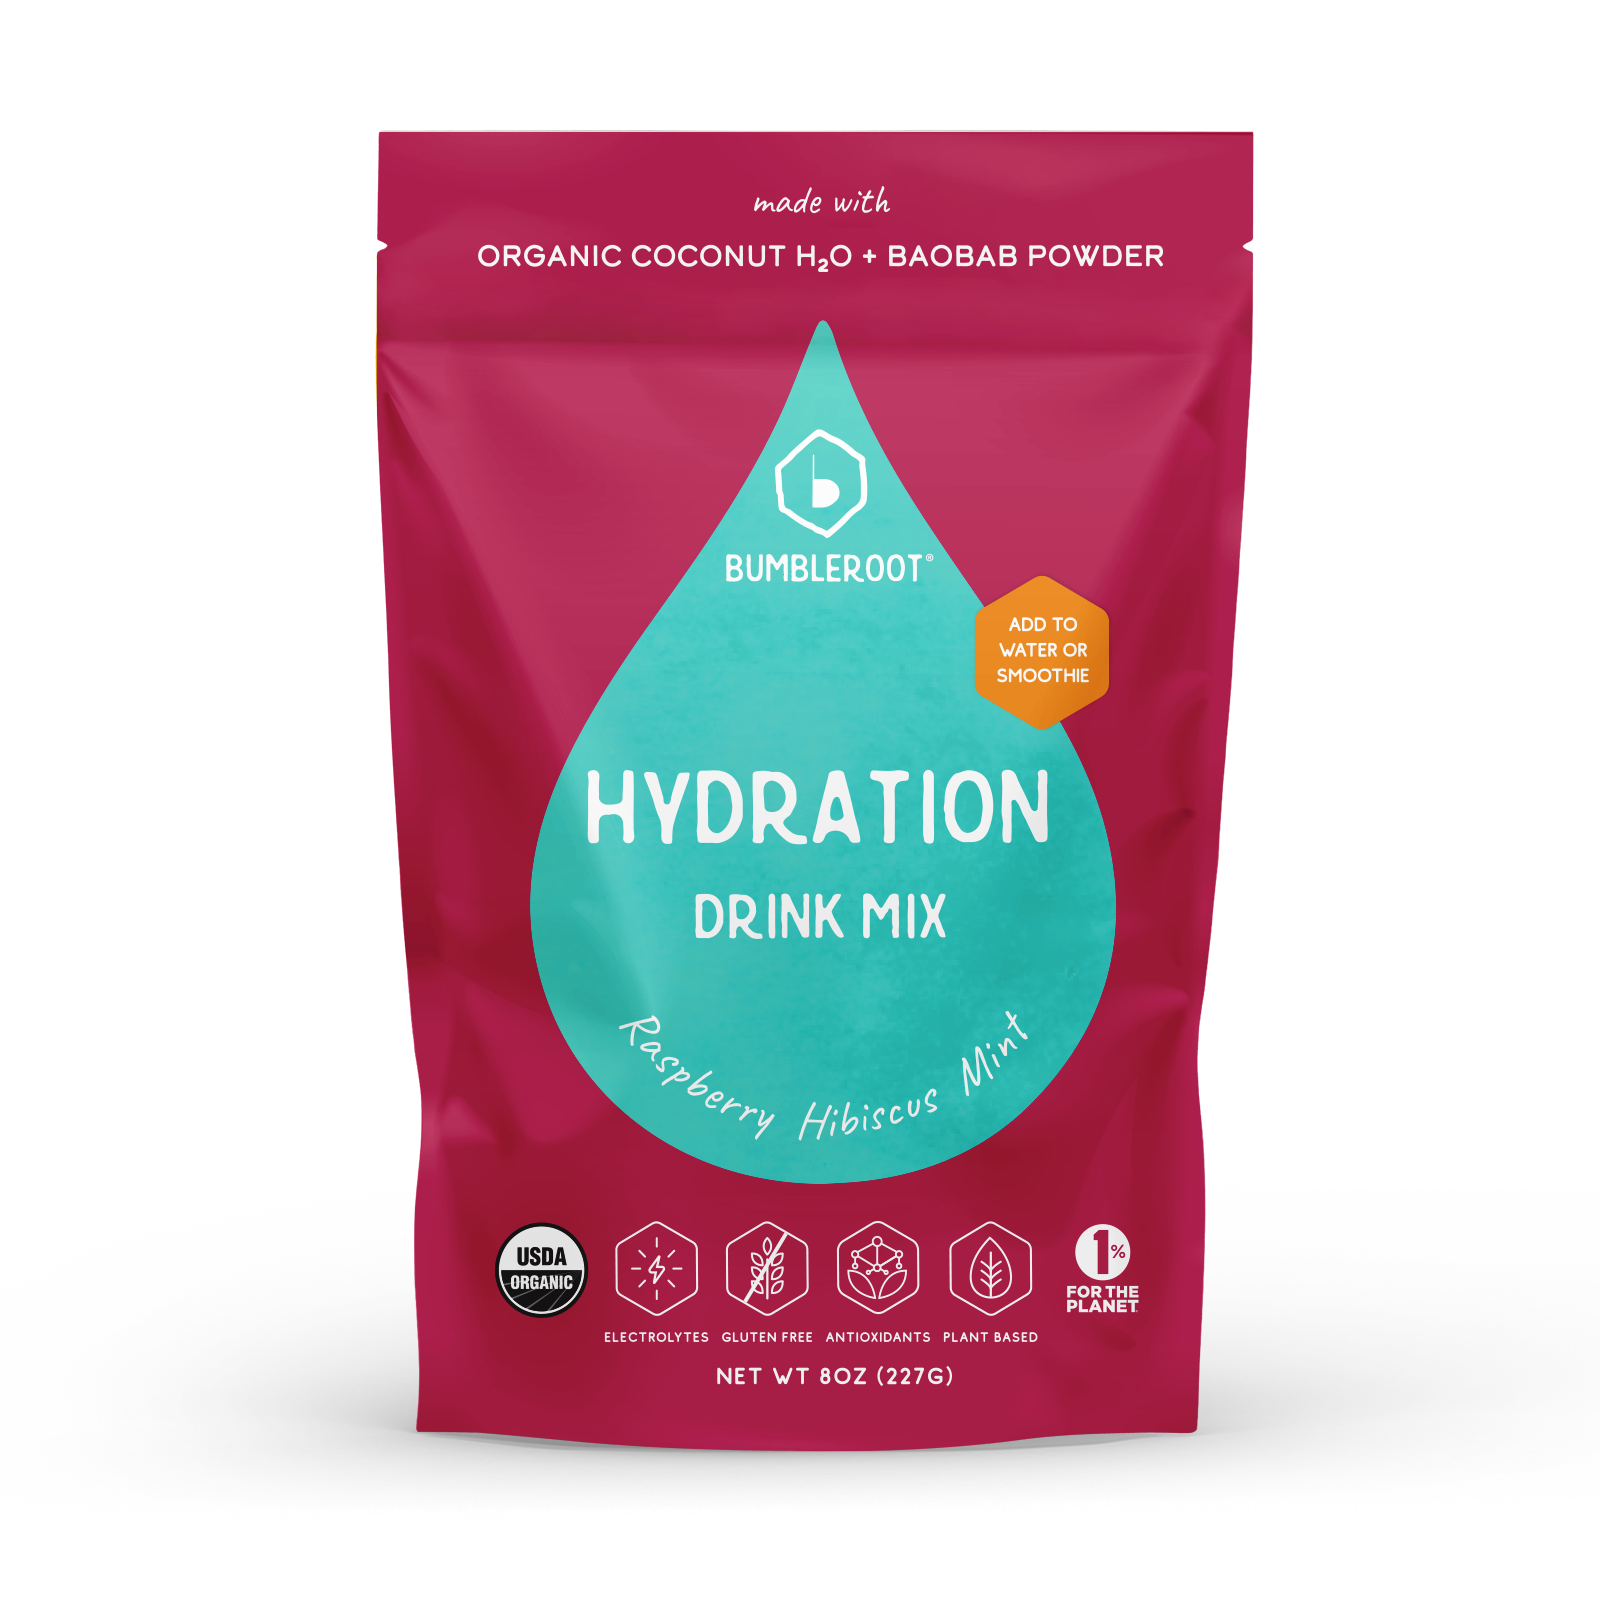 Organic Hydration Drink Mix (Raspberry Hibiscus Mint)